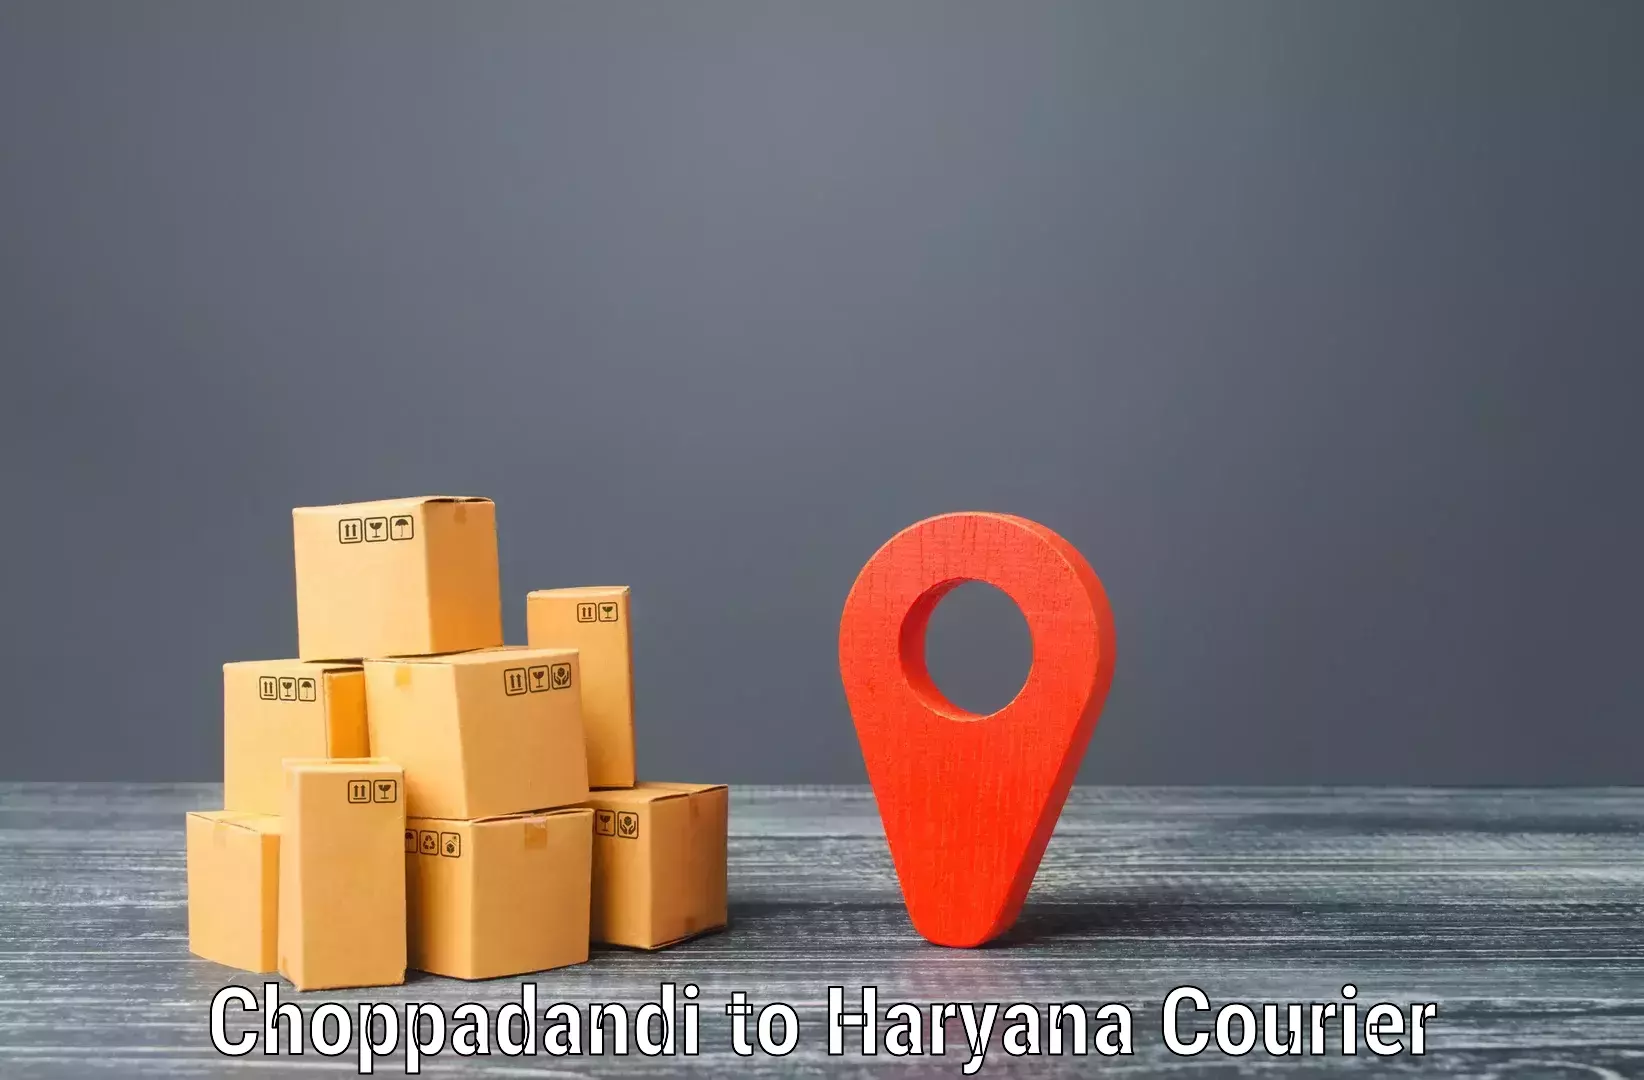 Nationwide shipping capabilities Choppadandi to Gurgaon